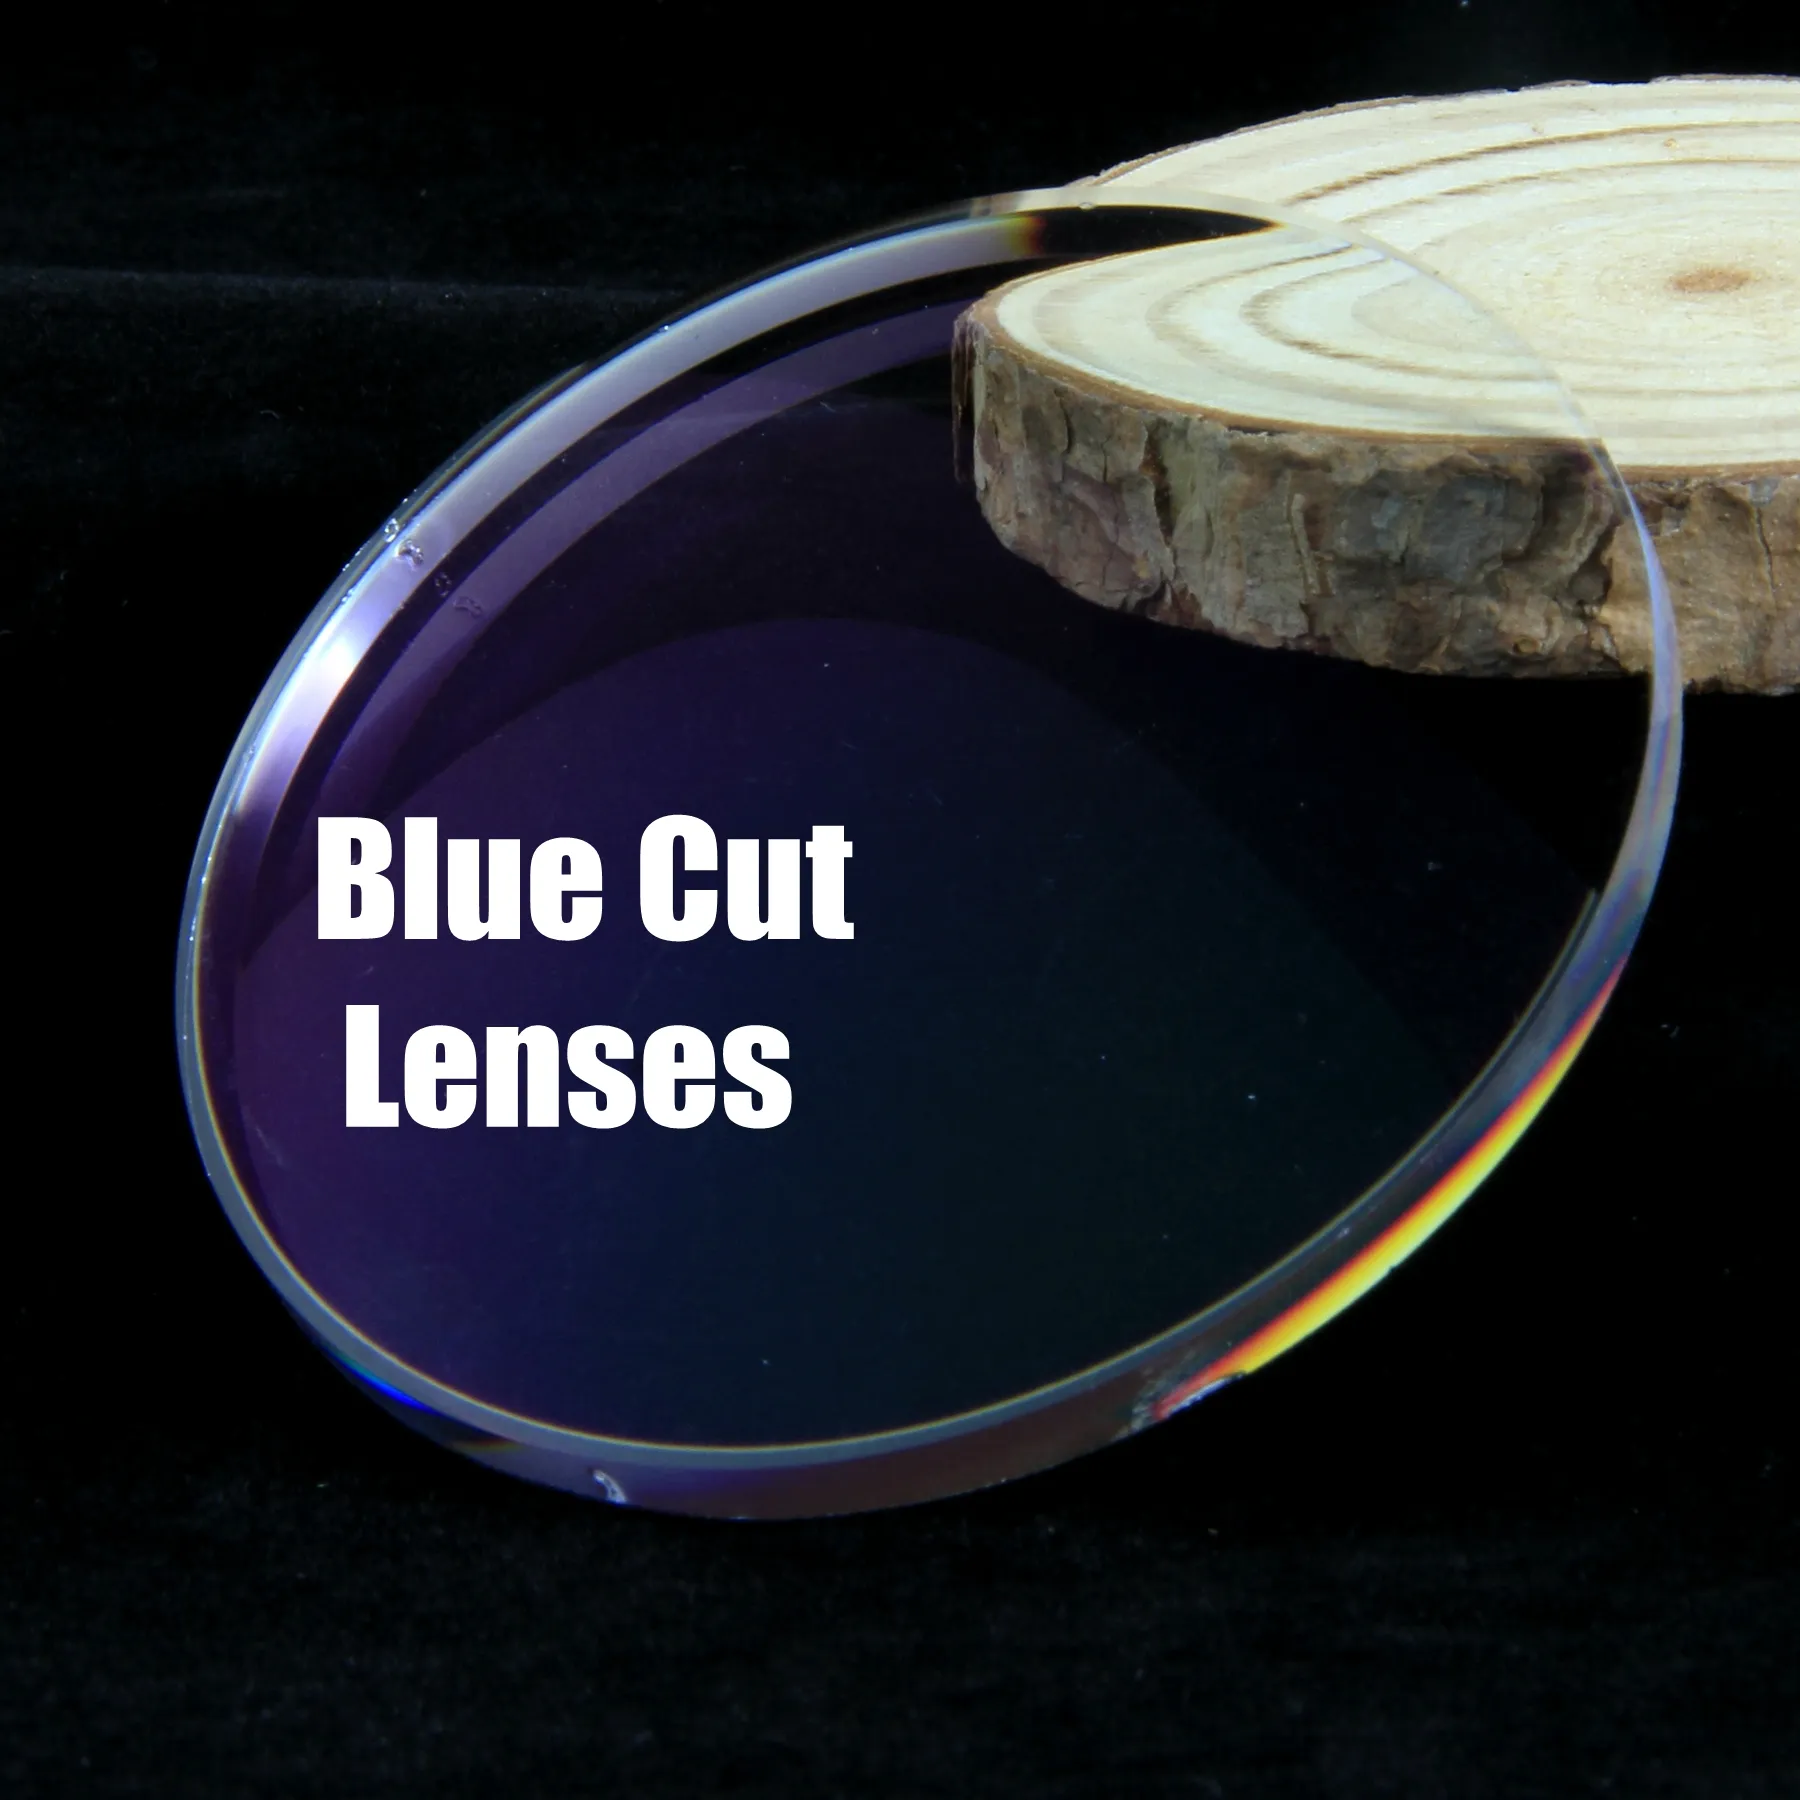 Danyang 1.56 lensa oftalmik potongan biru CR39 pemblokir cahaya biru kacamata oftalmik lensa kacamata